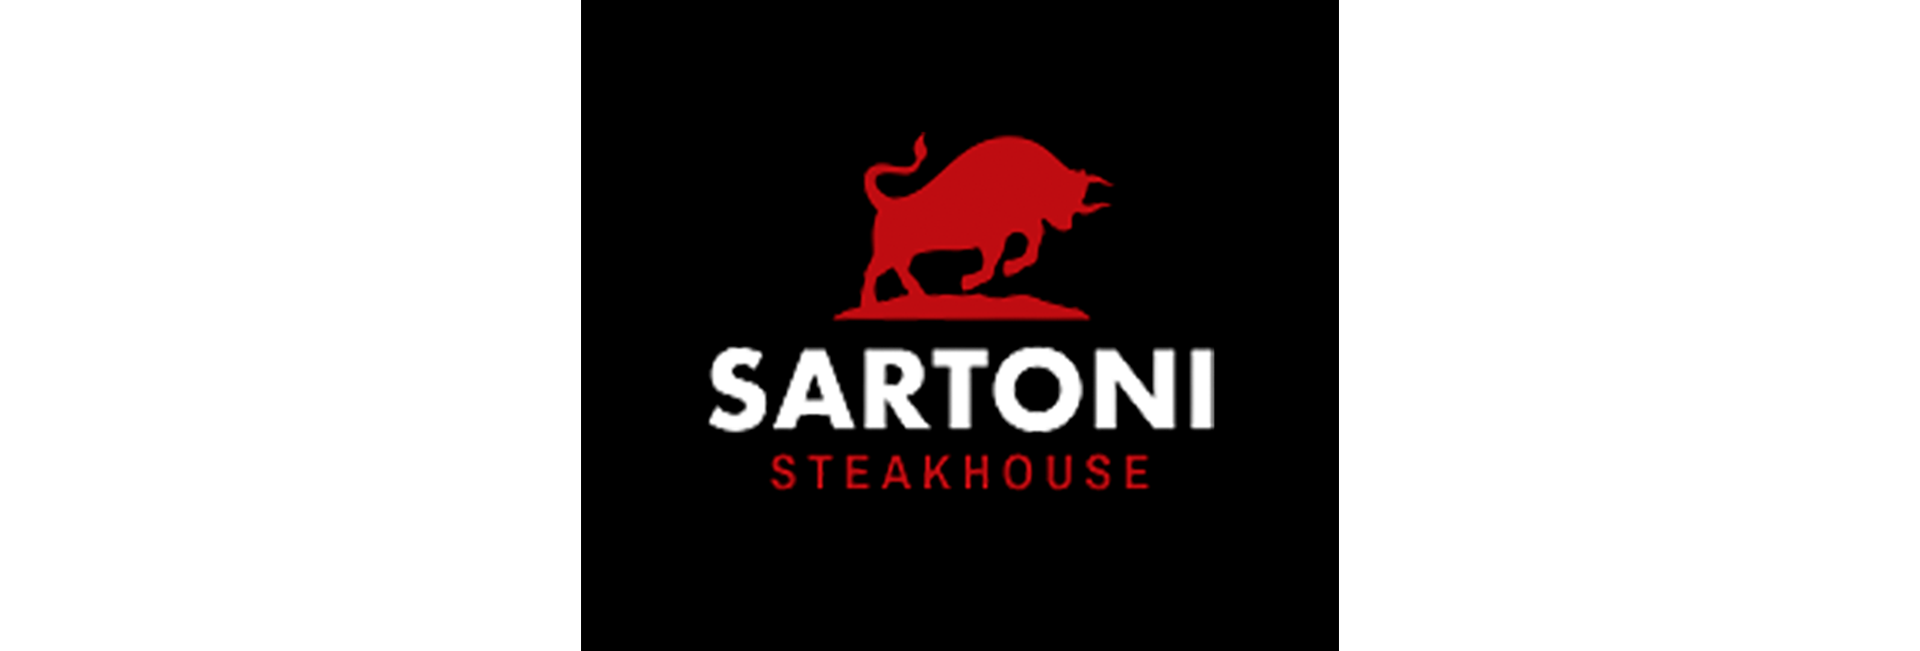 Lojas-Sartoni-steakhouse